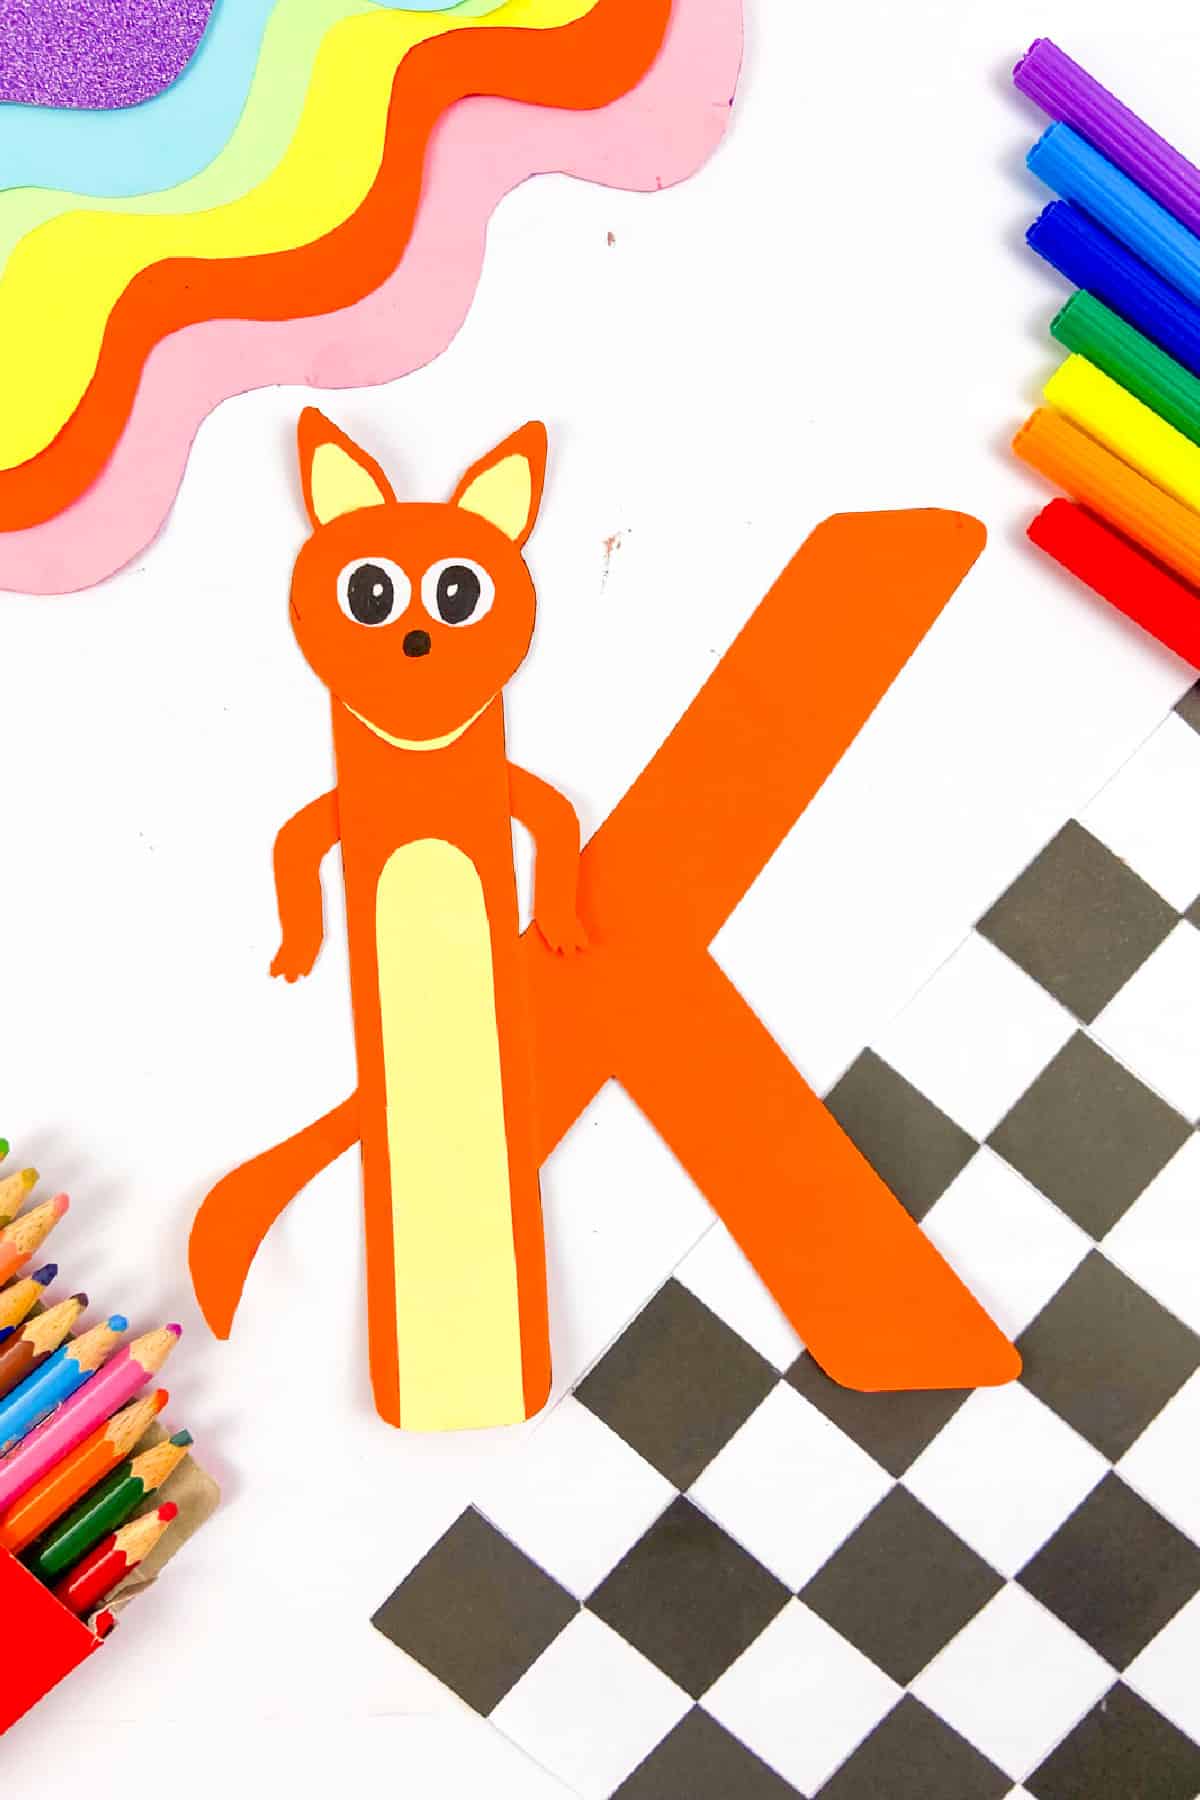 k is for kangaroo